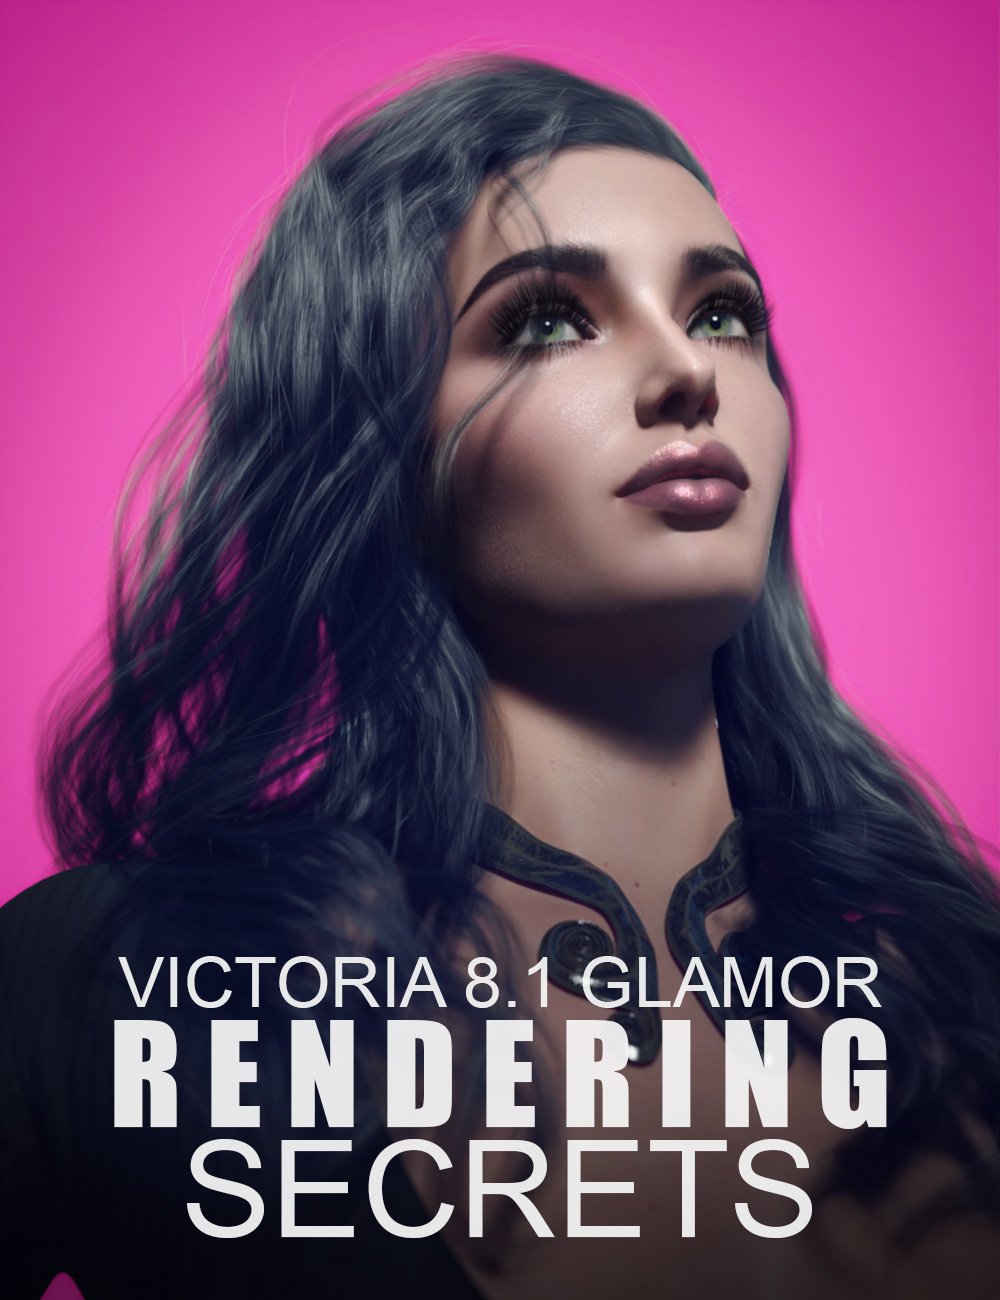 Victoria 8 1 Glamor Rendering Secrets Video Tutorial